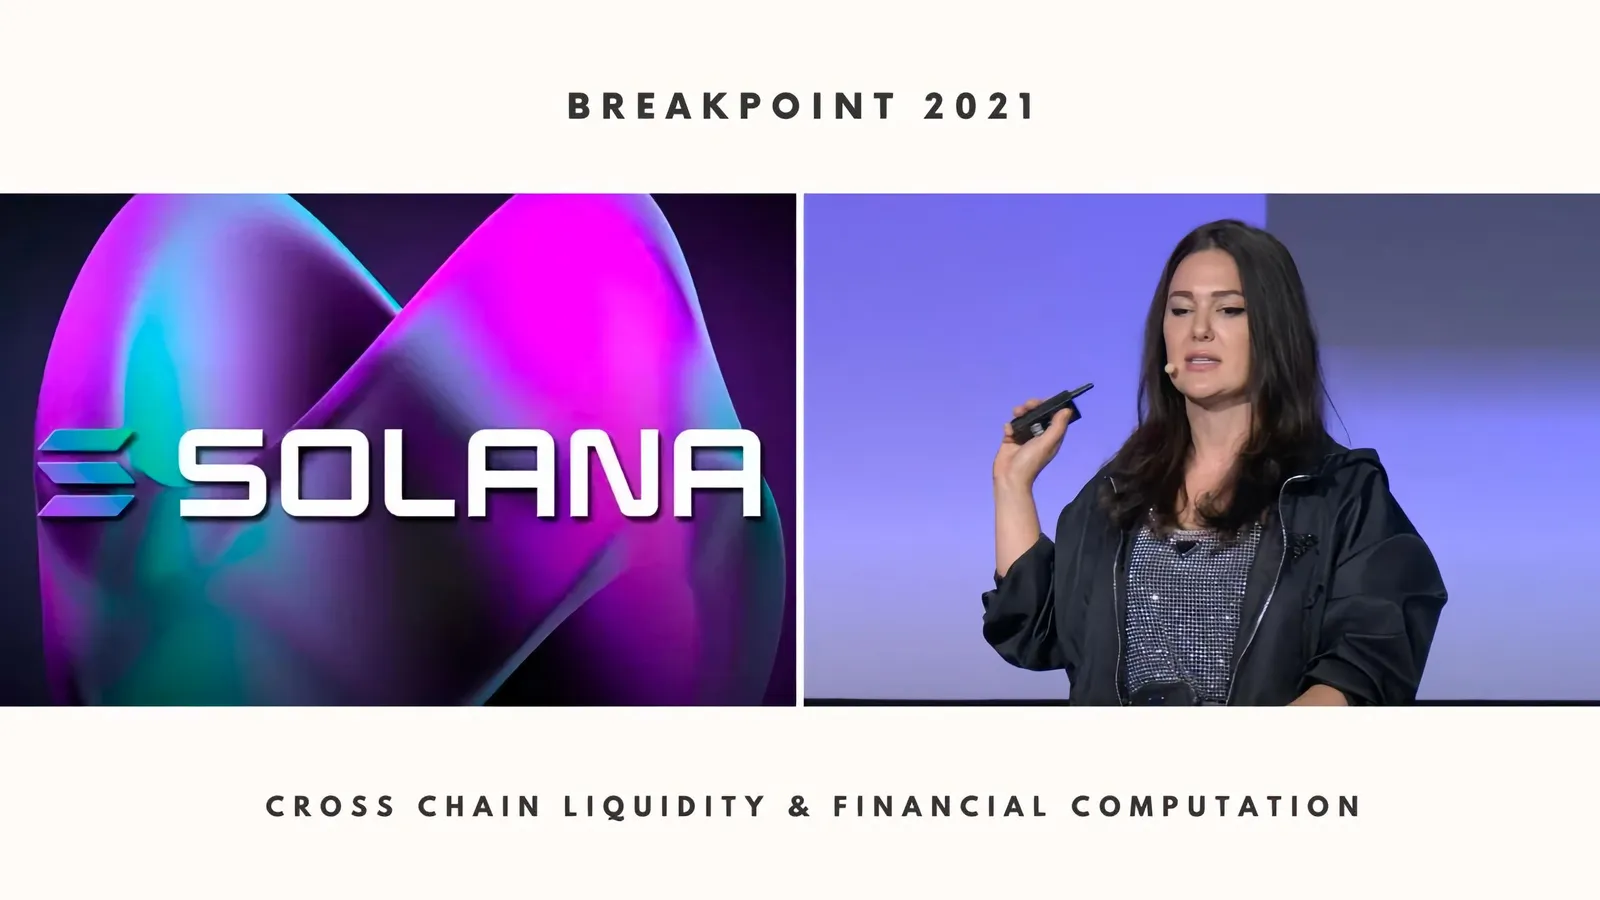 Cross Chain Liquidity & Financial Computation - Breakpoint 2021